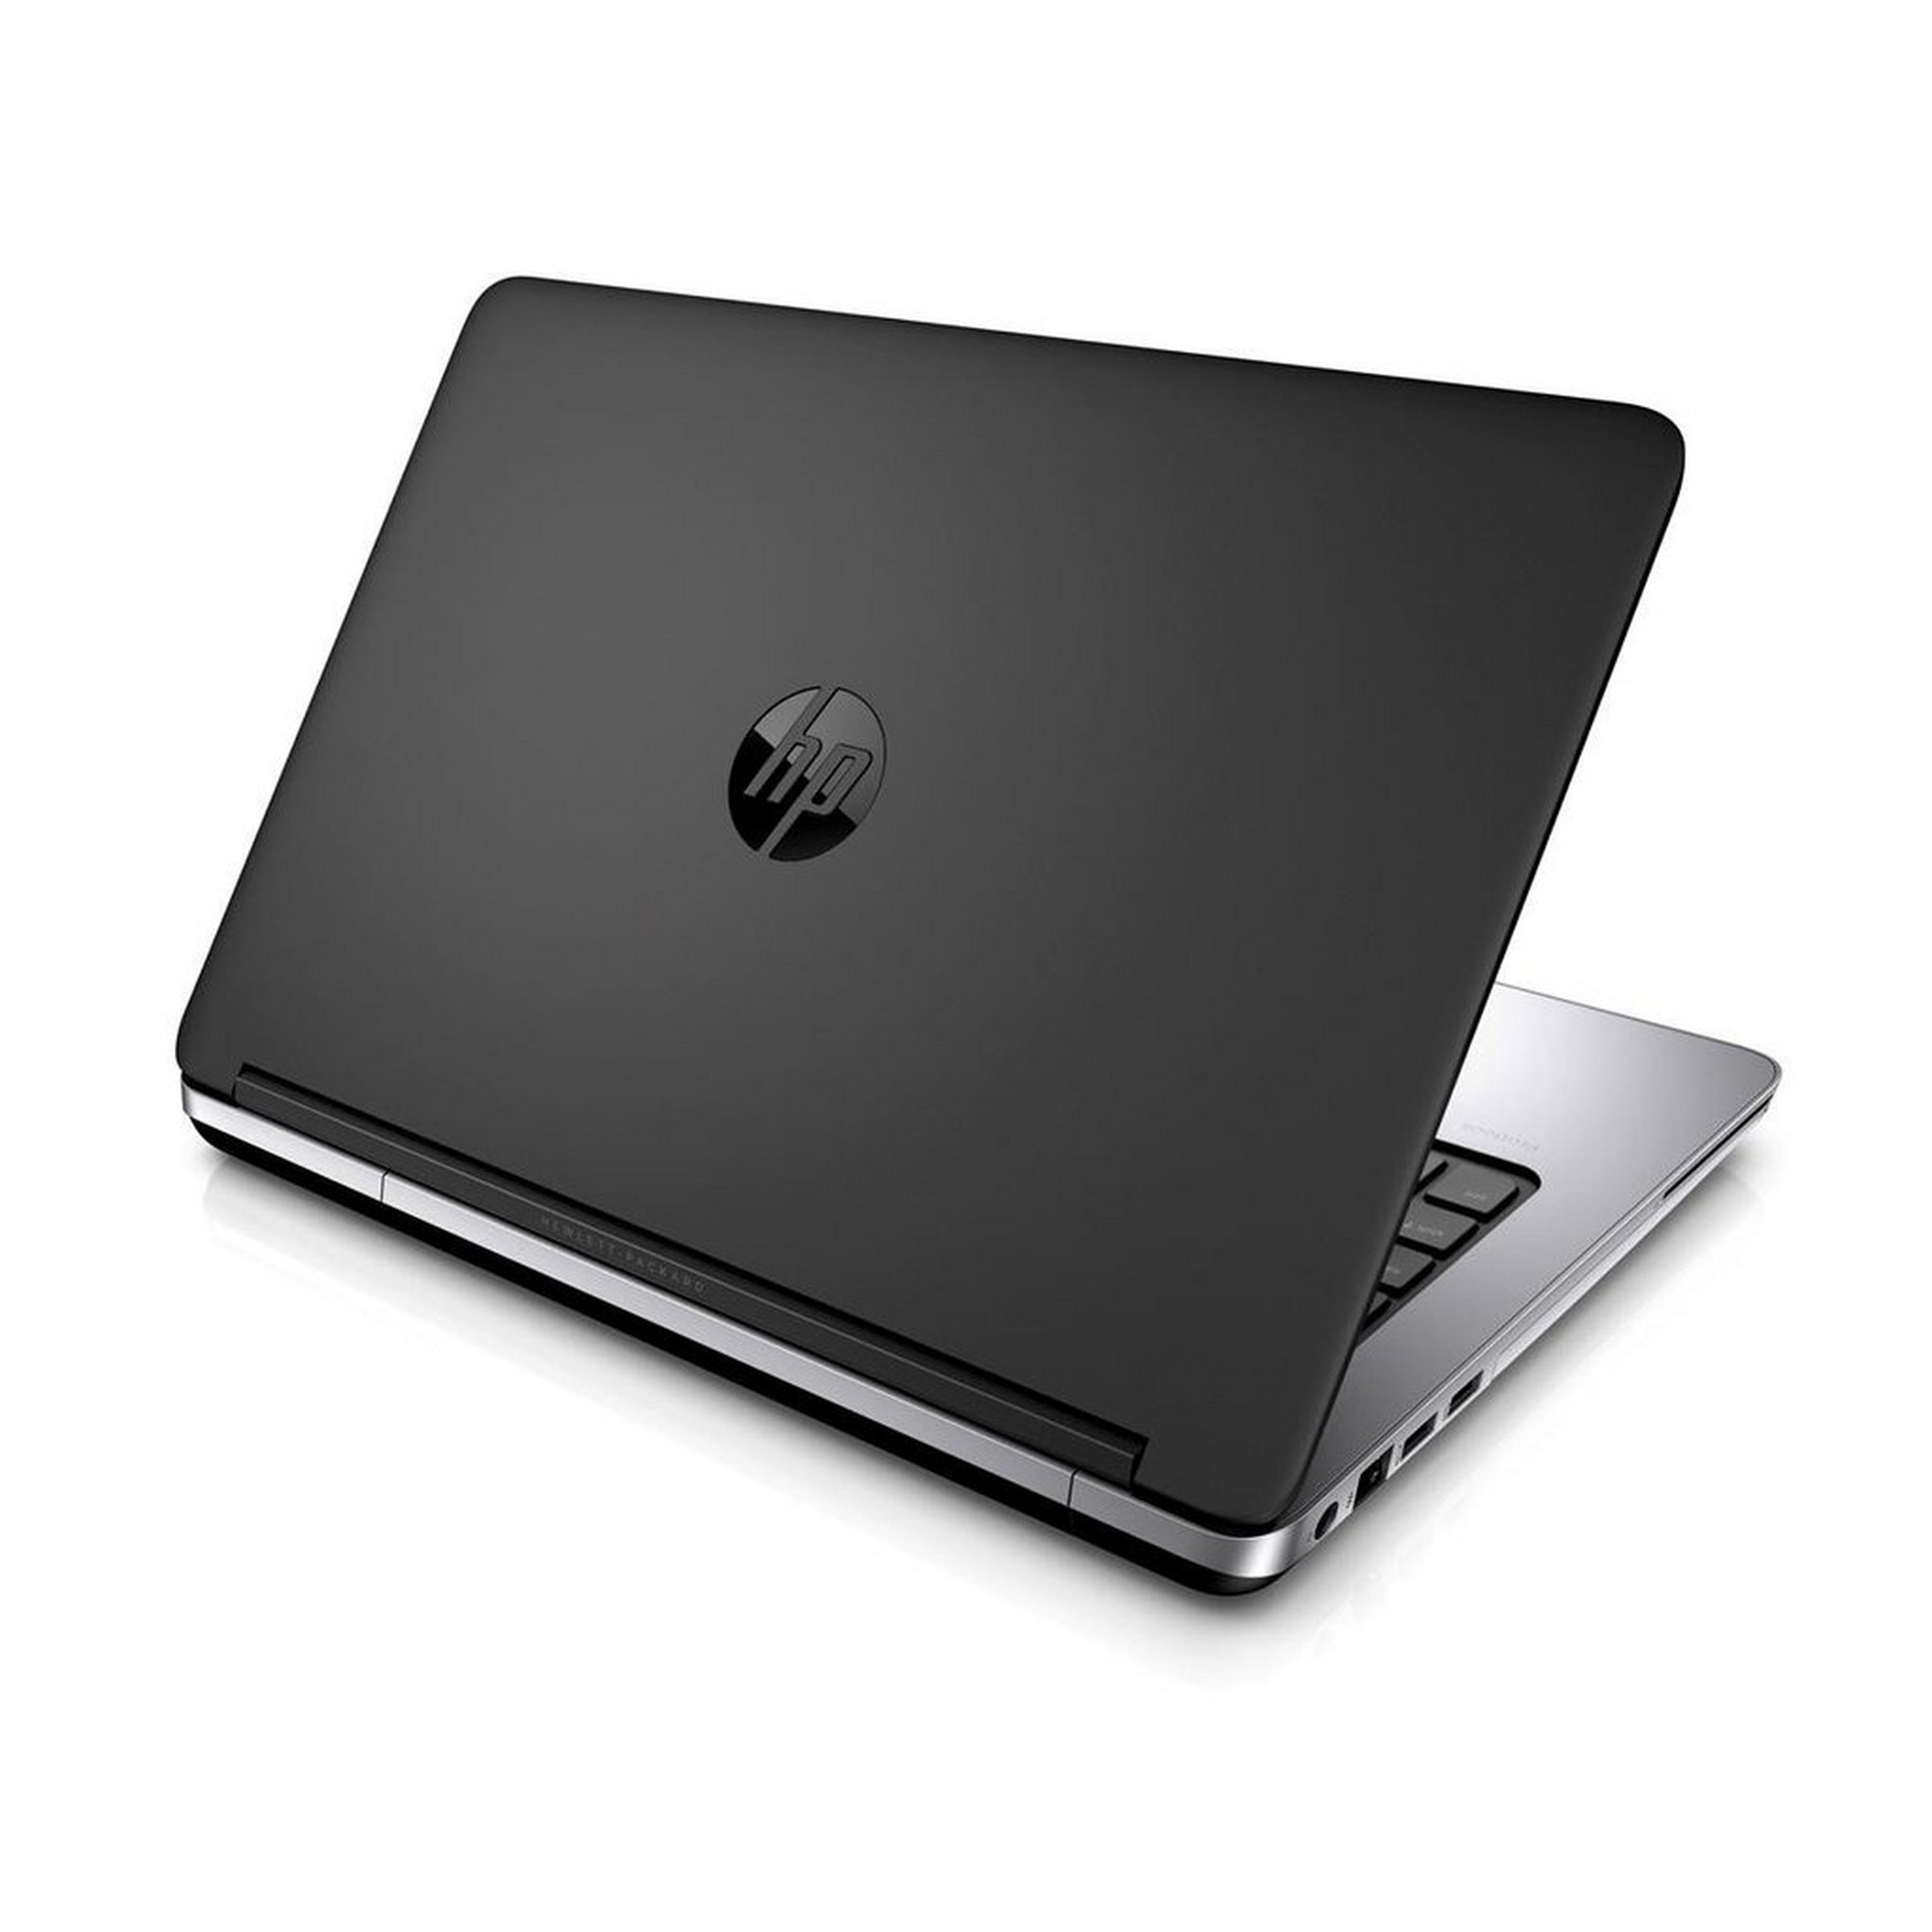 HP ProBook 640G1 14" Laptop, 2.5GHz Intel i5 Dual Core Gen 4, 4GB RAM, 320GB SATA HD, Windows 10 Home 64 Bit (Refurbished Grade B)